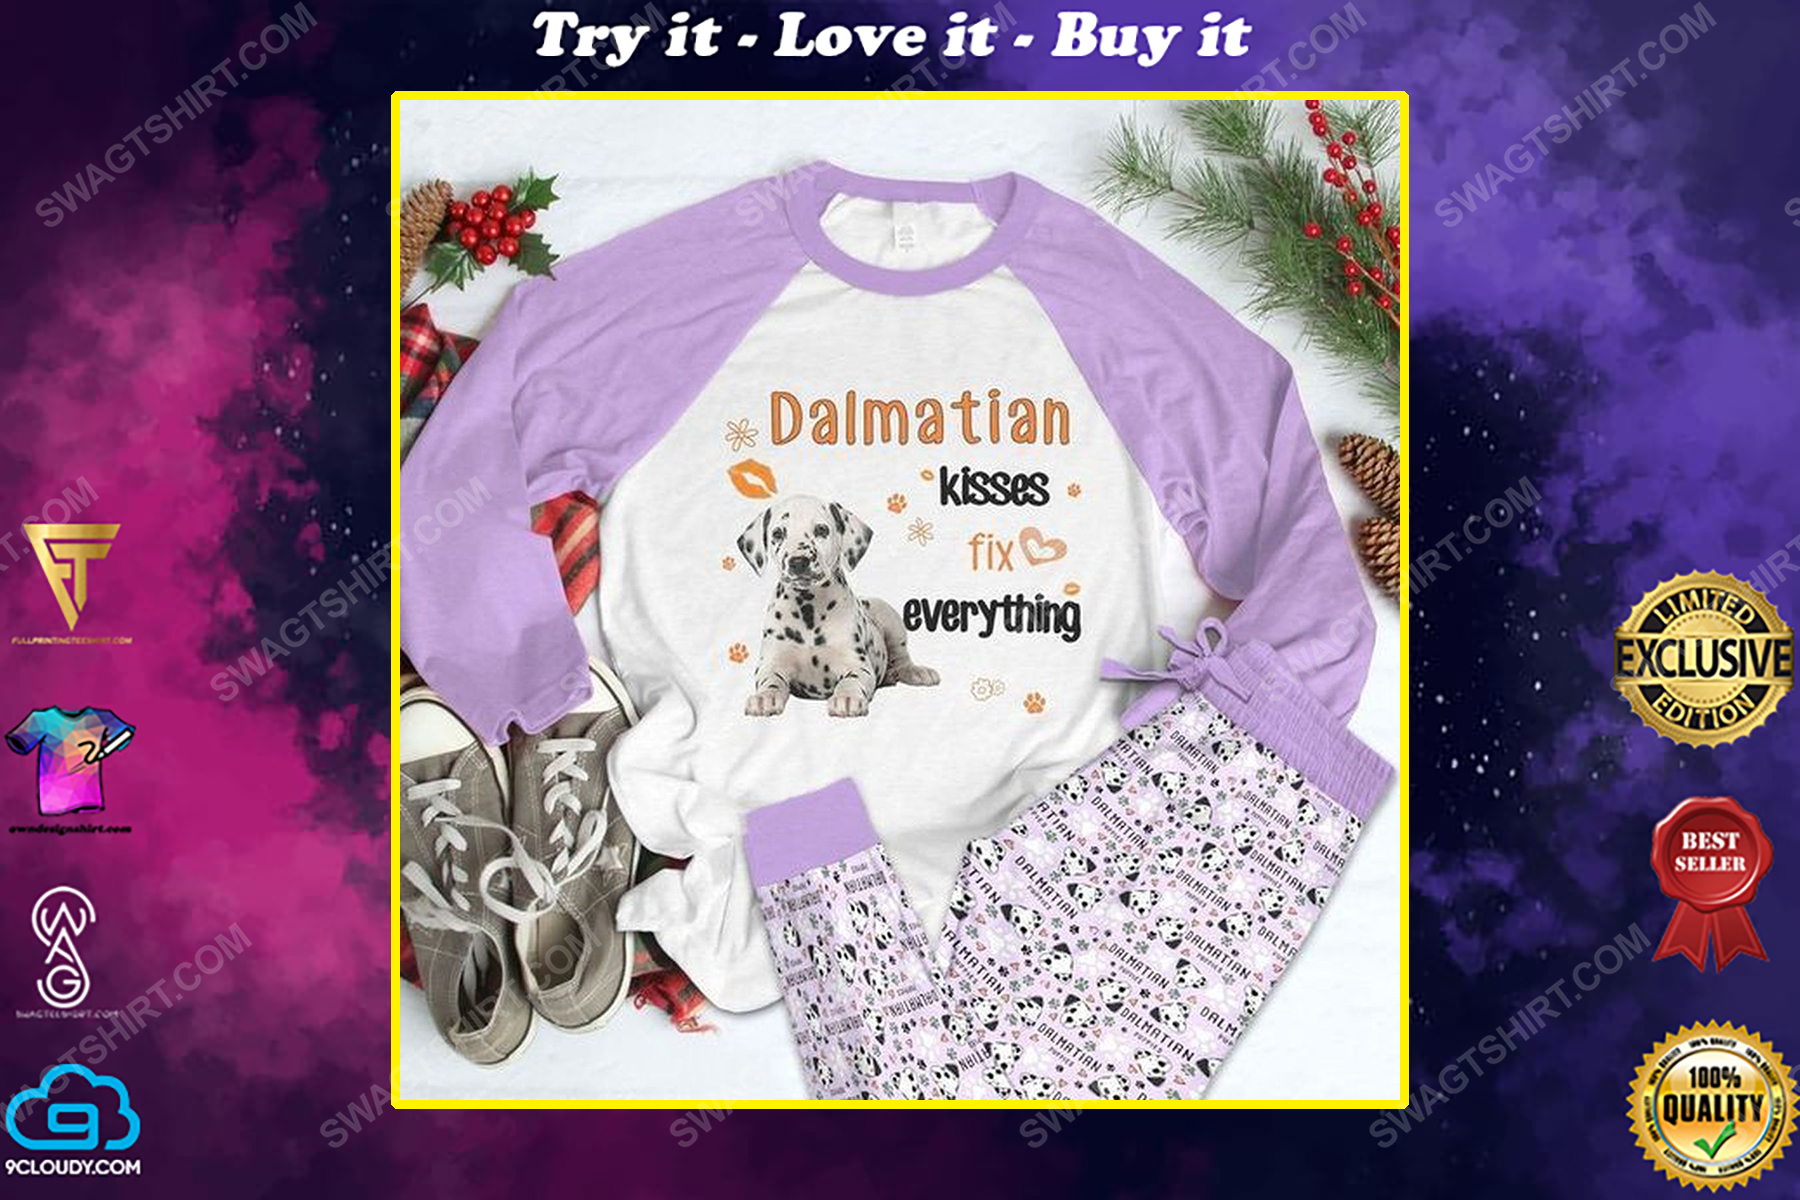 Dog dalmatian kisses fix everything full print pajamas set